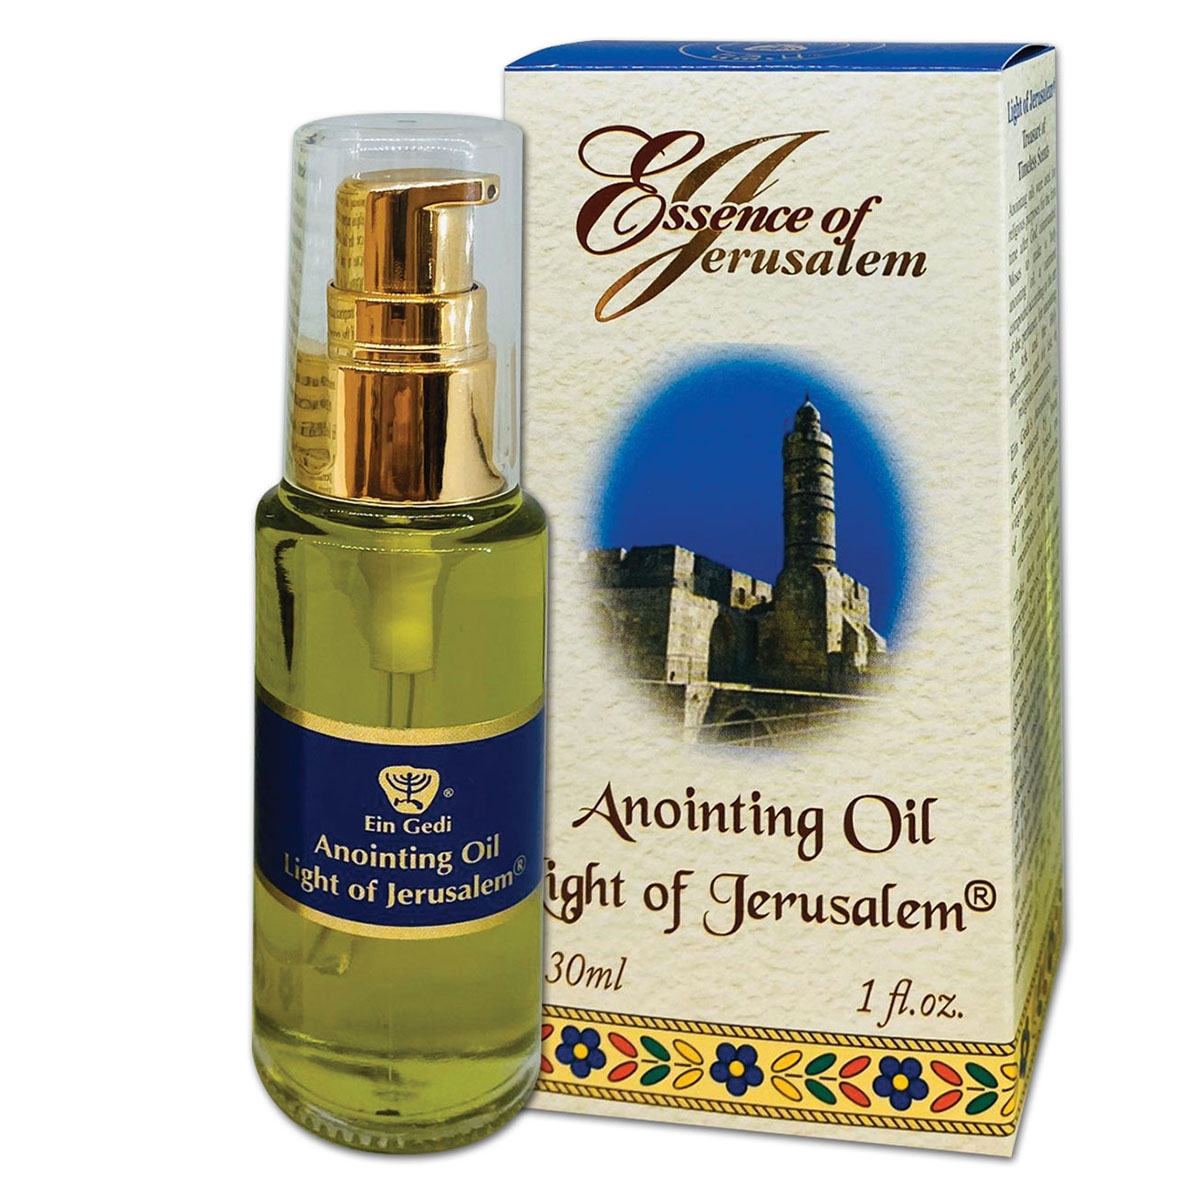 Ein Gedi Essence of Jerusalem Anointing Oil – Light of Jerusalem (30 ml) - 1